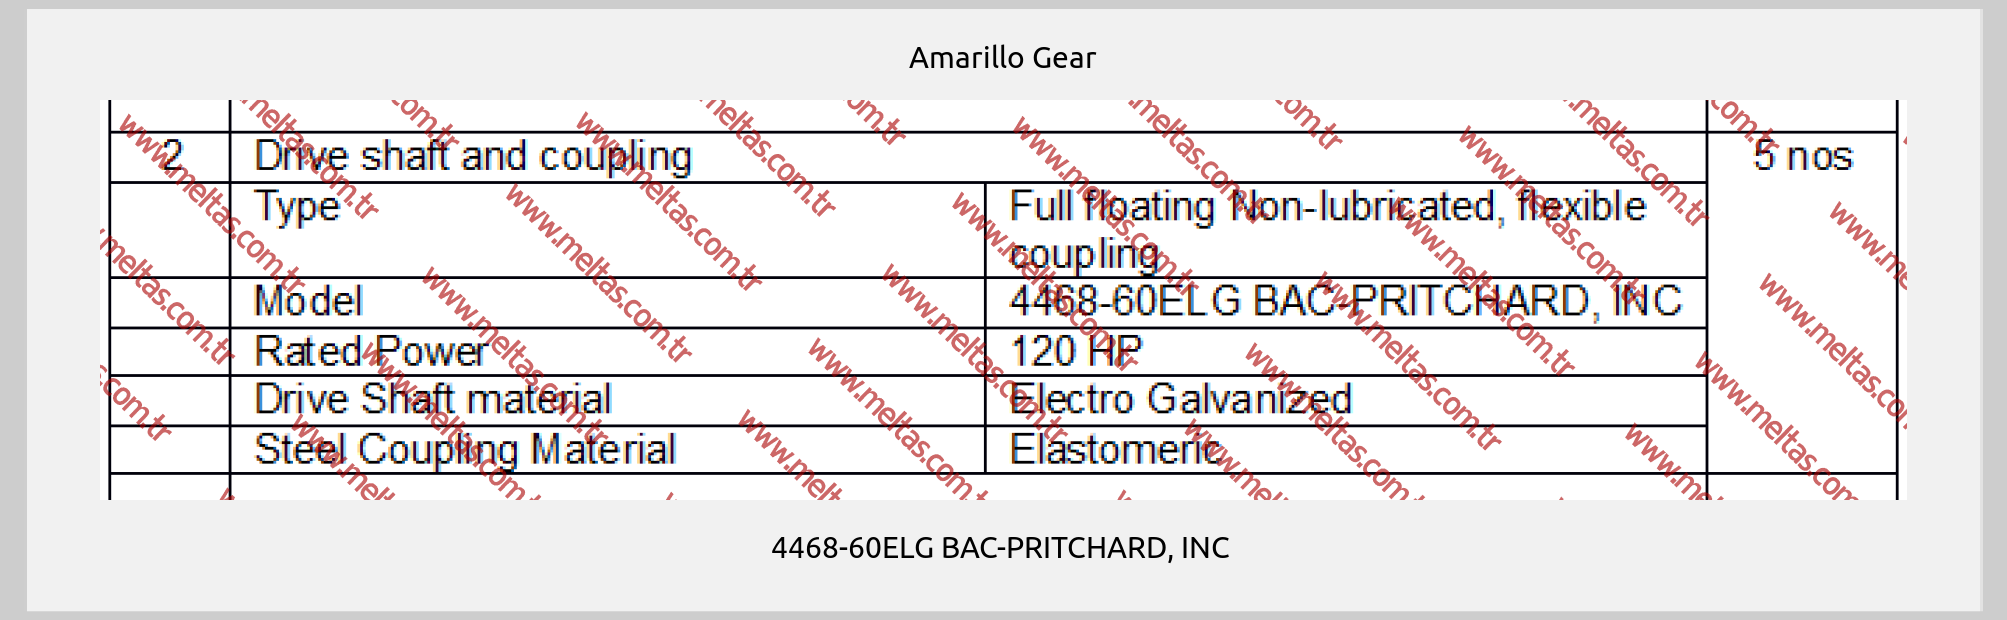 Amarillo Gear - 4468-60ELG BAC-PRITCHARD, INC 